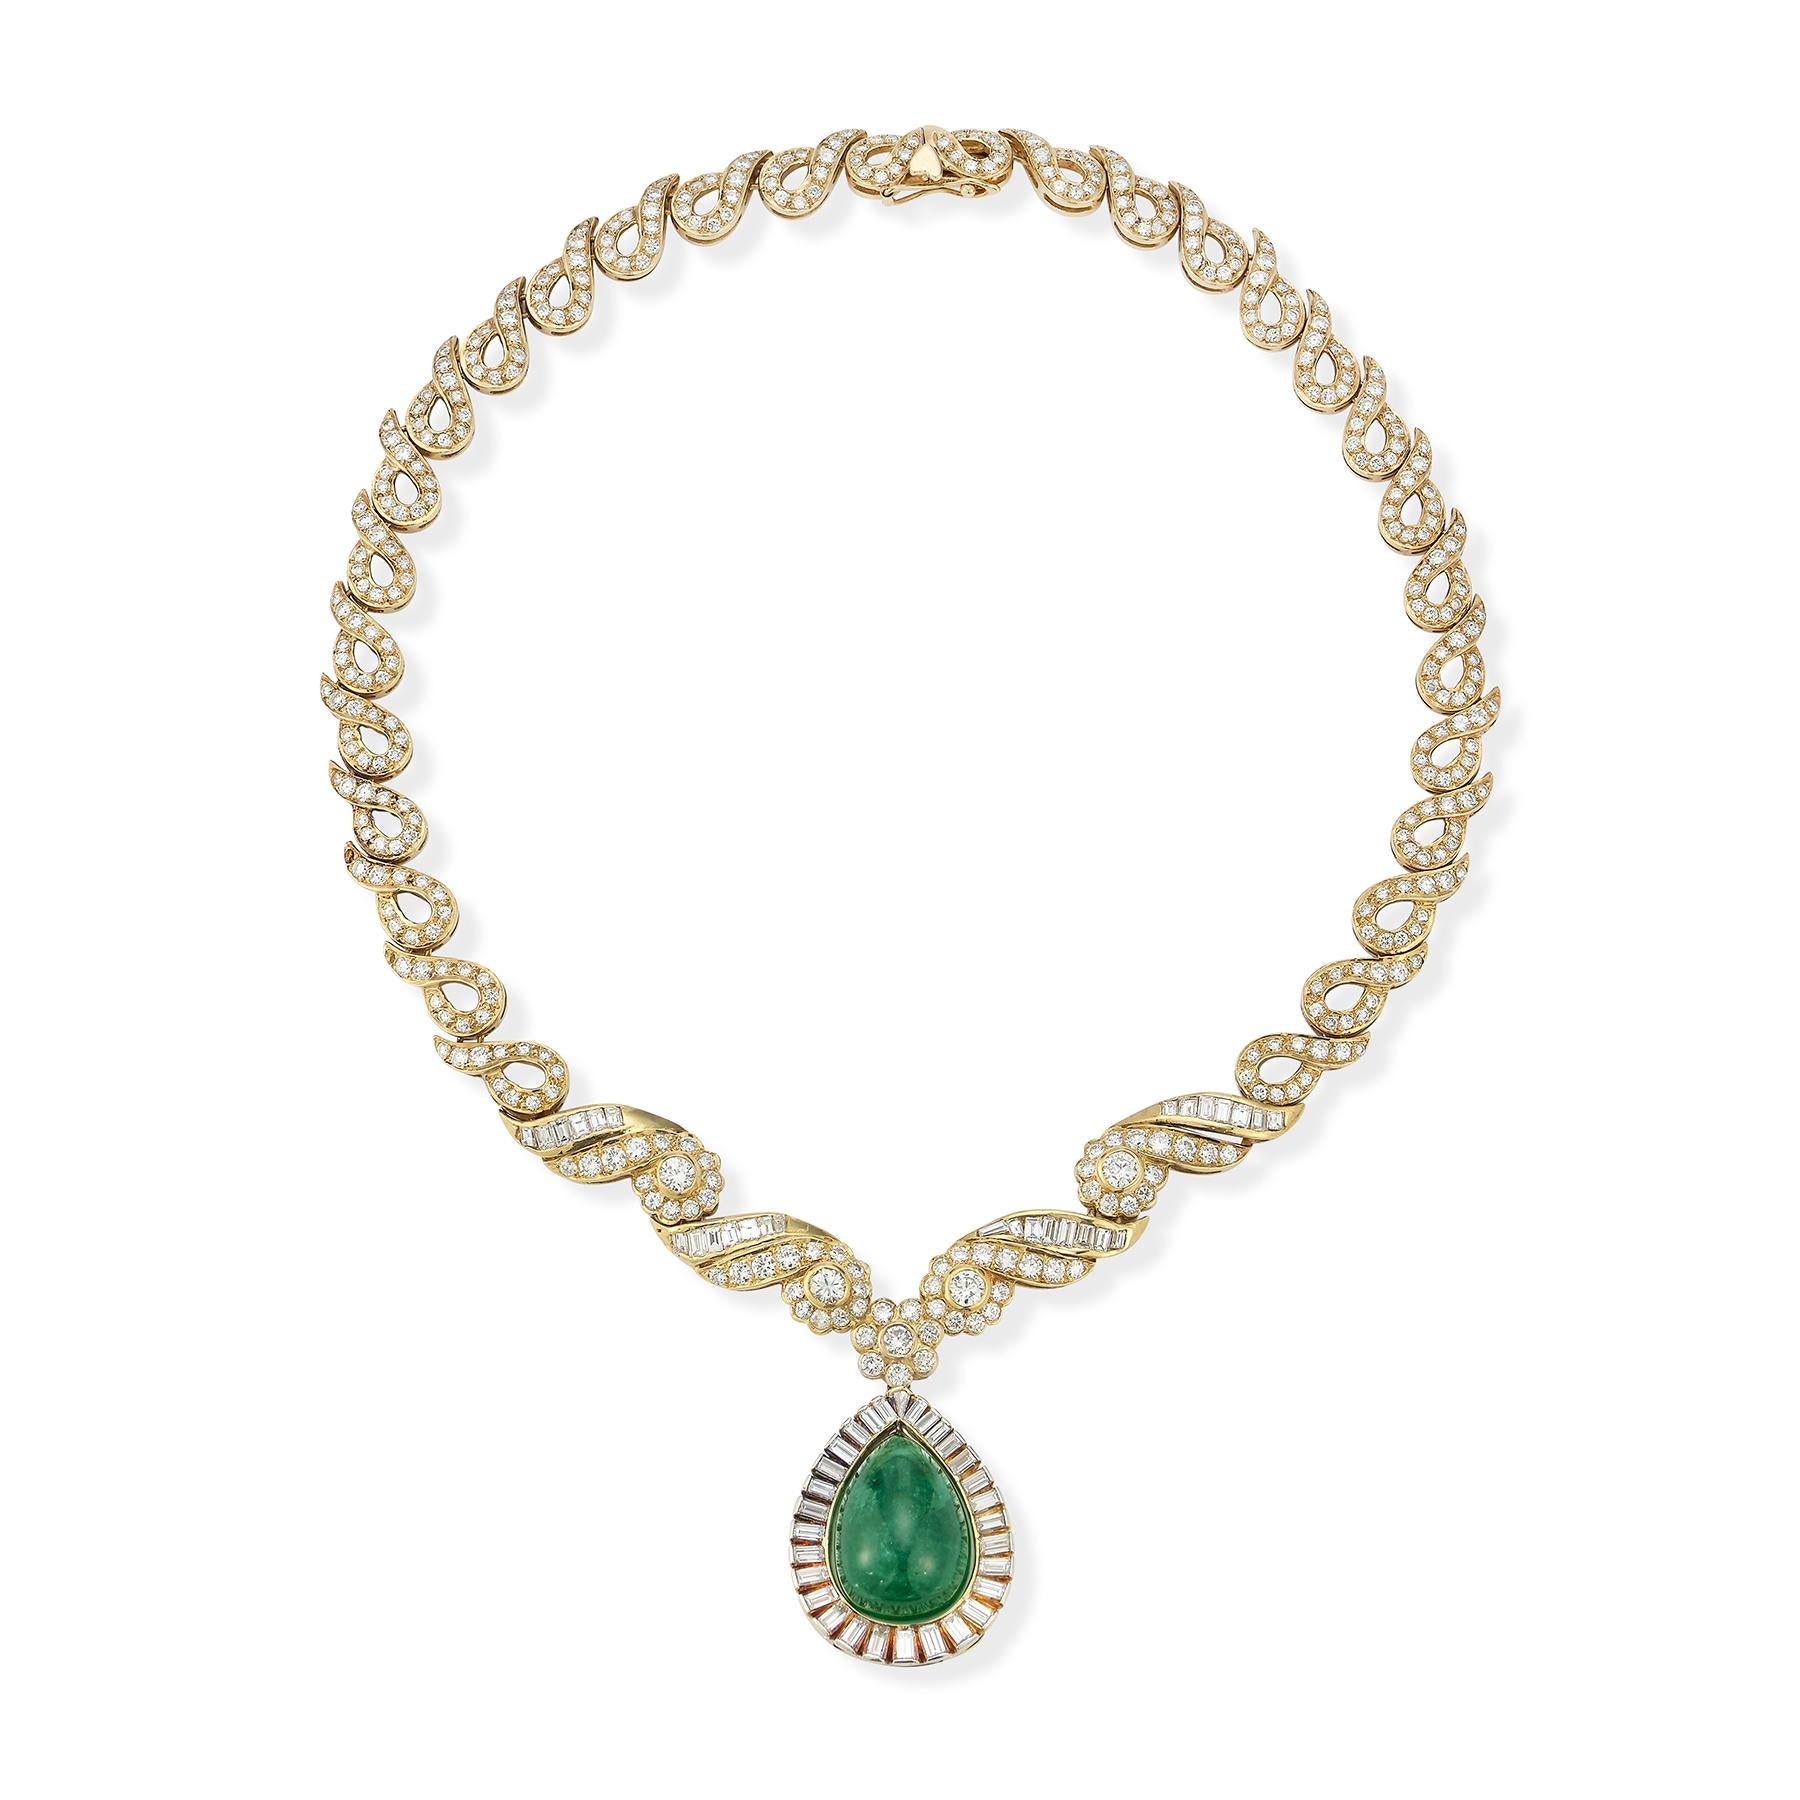 Emerald & Diamond Pendant Necklace

Approximate cabochon emerald weight:: 29.72 carats
Approximate diamond weight: 16.87 carats

Measurements: 16